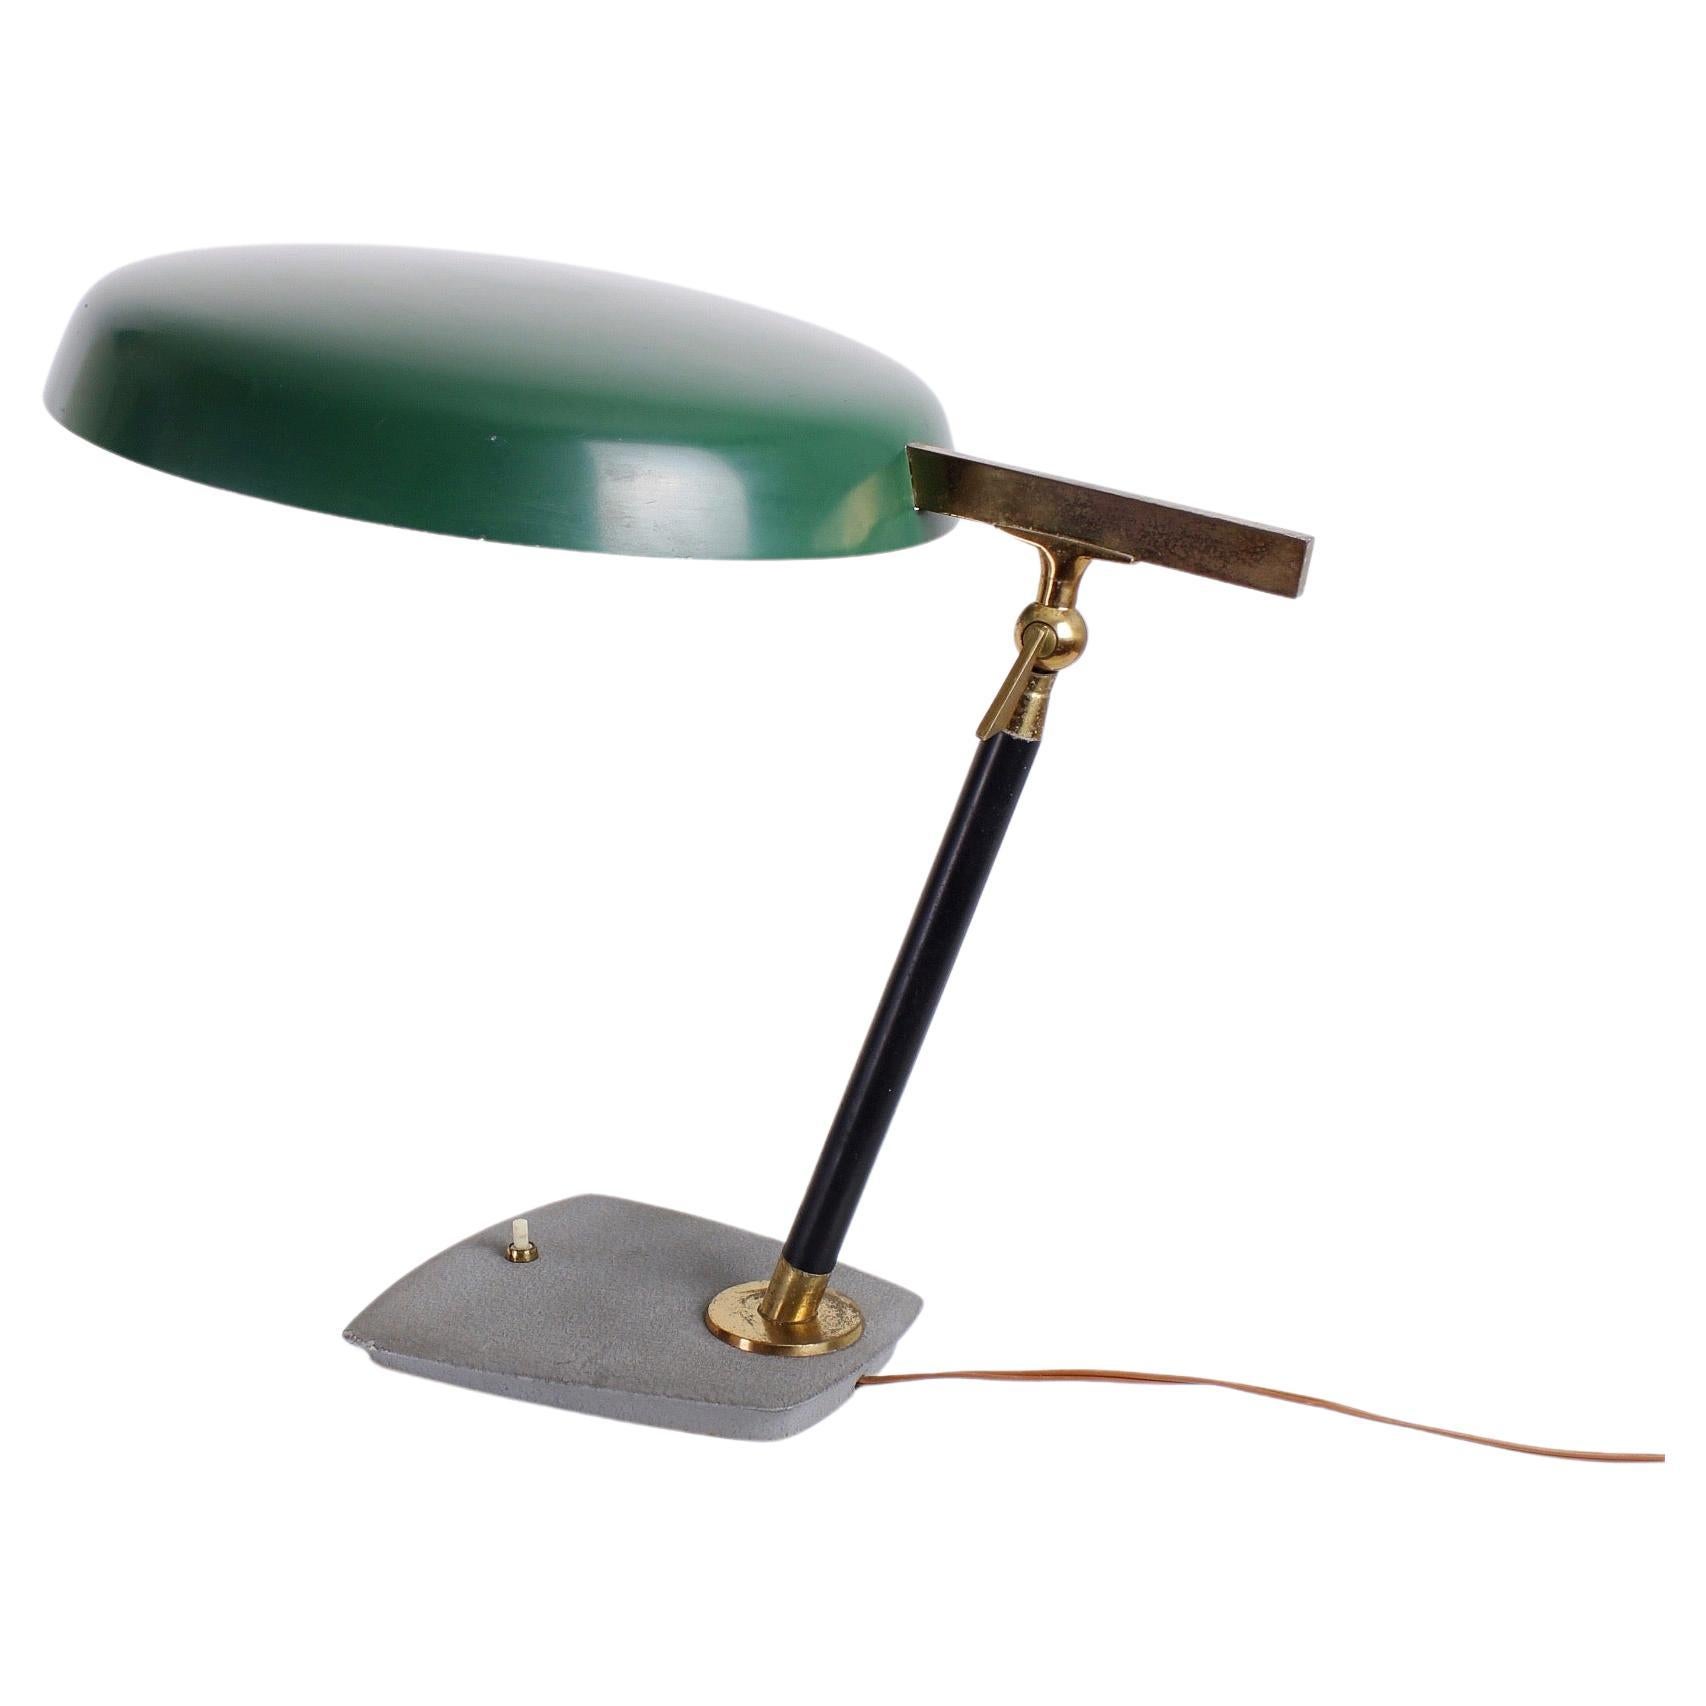 Model 554 desk lamp by Oscar Torlasco for Lumi, 1963